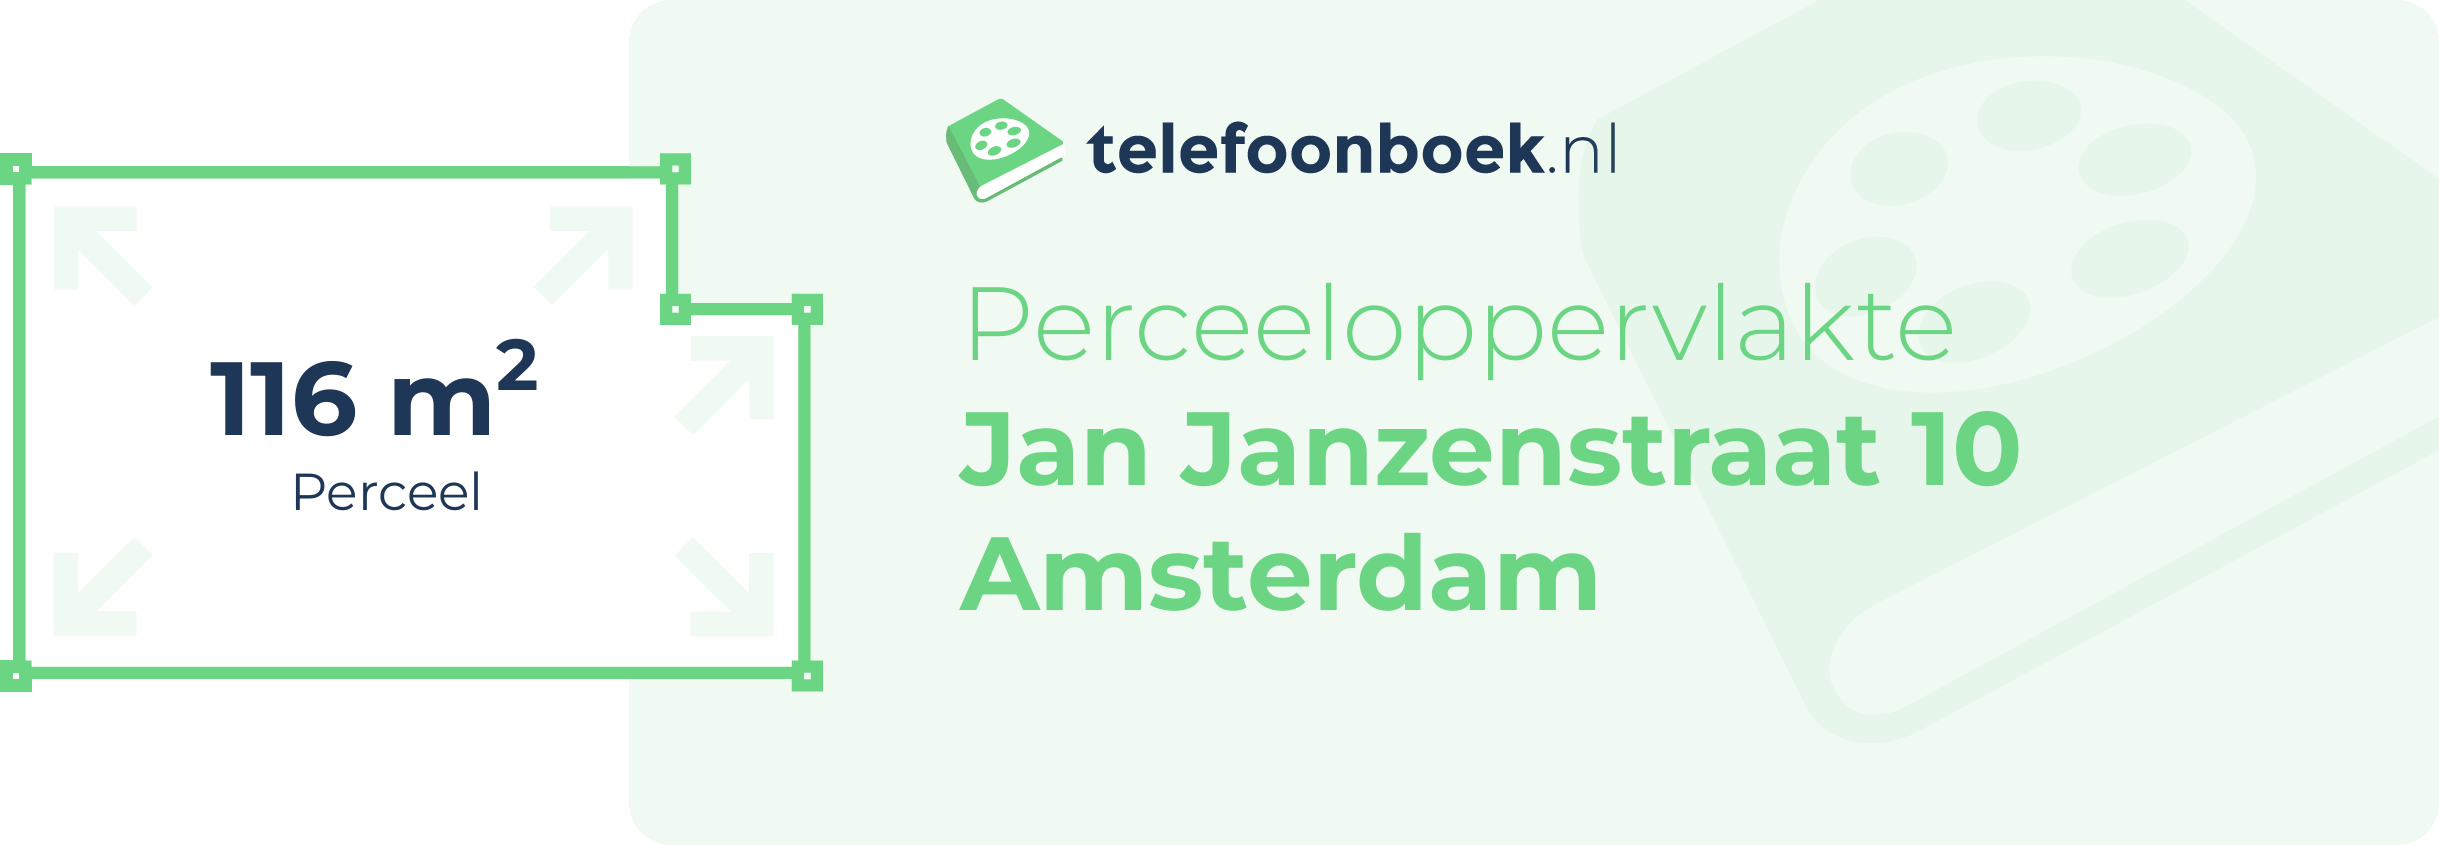 Perceeloppervlakte Jan Janzenstraat 10 Amsterdam